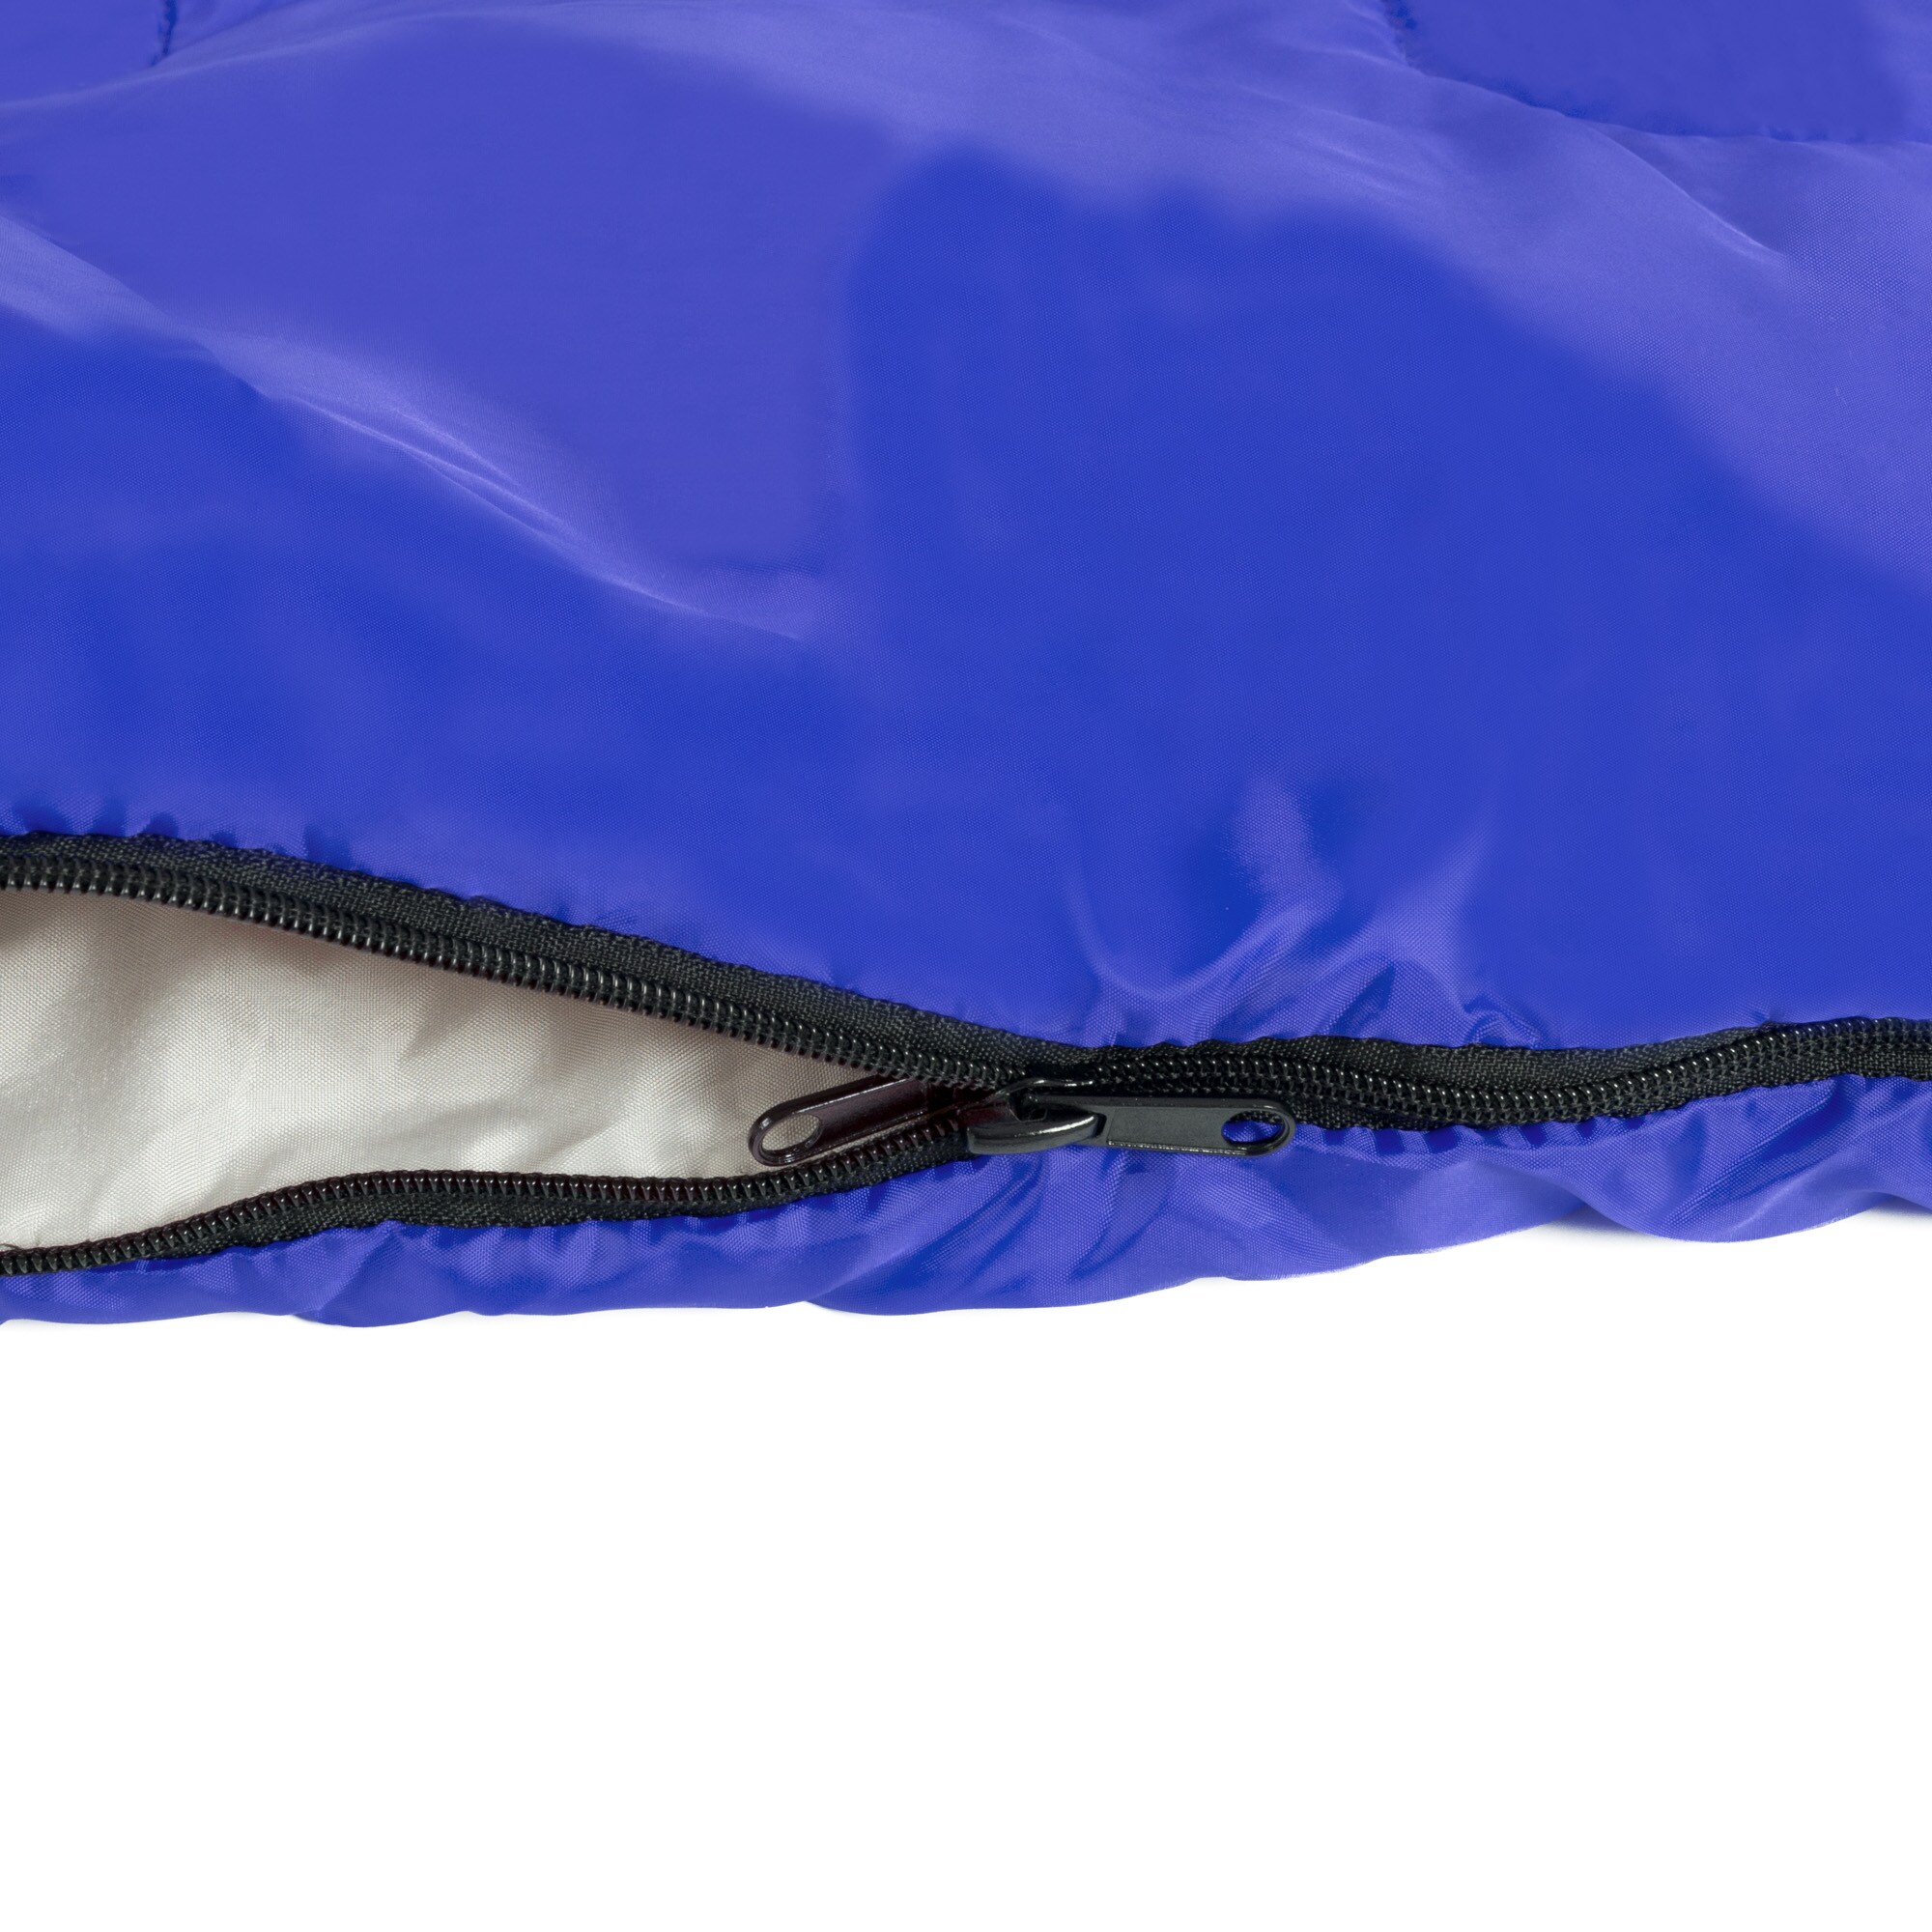 Wakeman Non-Slip Luxury Foam Camping Sleep Mat - Dark Blue